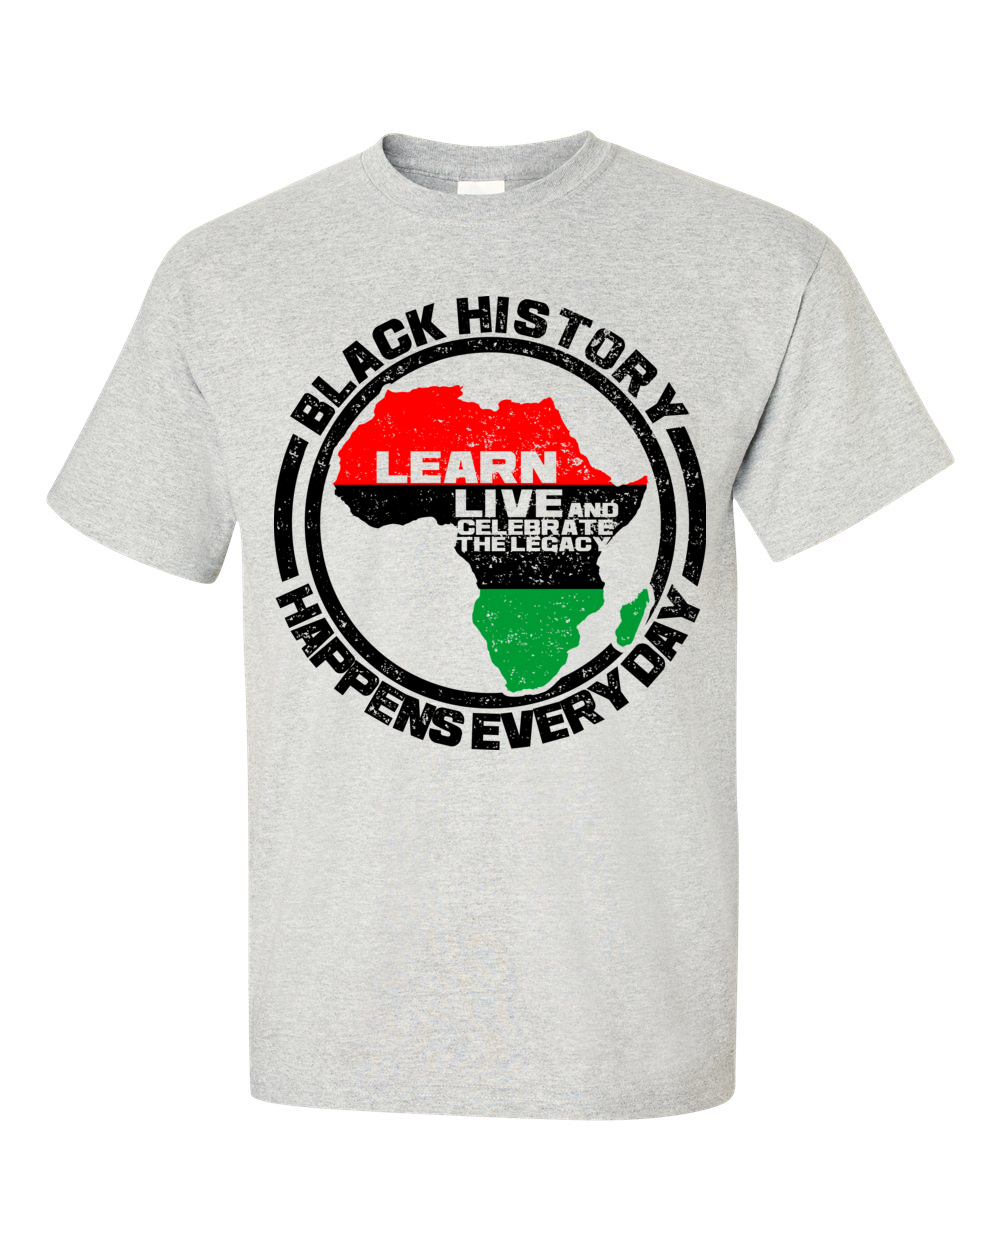 Black History Happens Everyday Short Sleeve Unisex T-Shirt-T-Shirt-RBG Forever-Small-Ash-The Black Art Depot